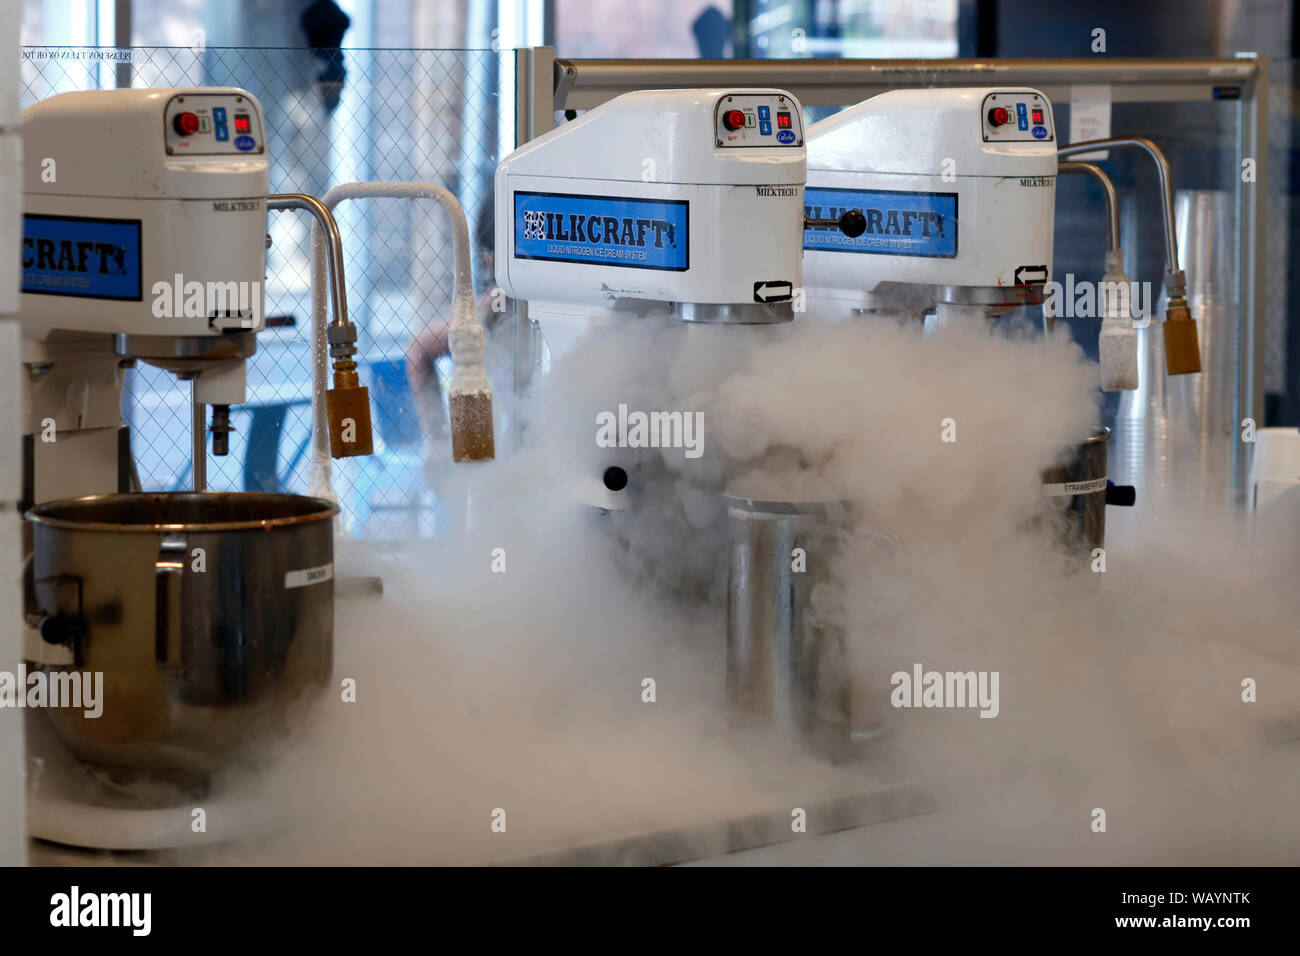 Nitrogen ice cream being made at Milkcraft New Haven, 280 Crown Street, New Haven, CT Stock Photo